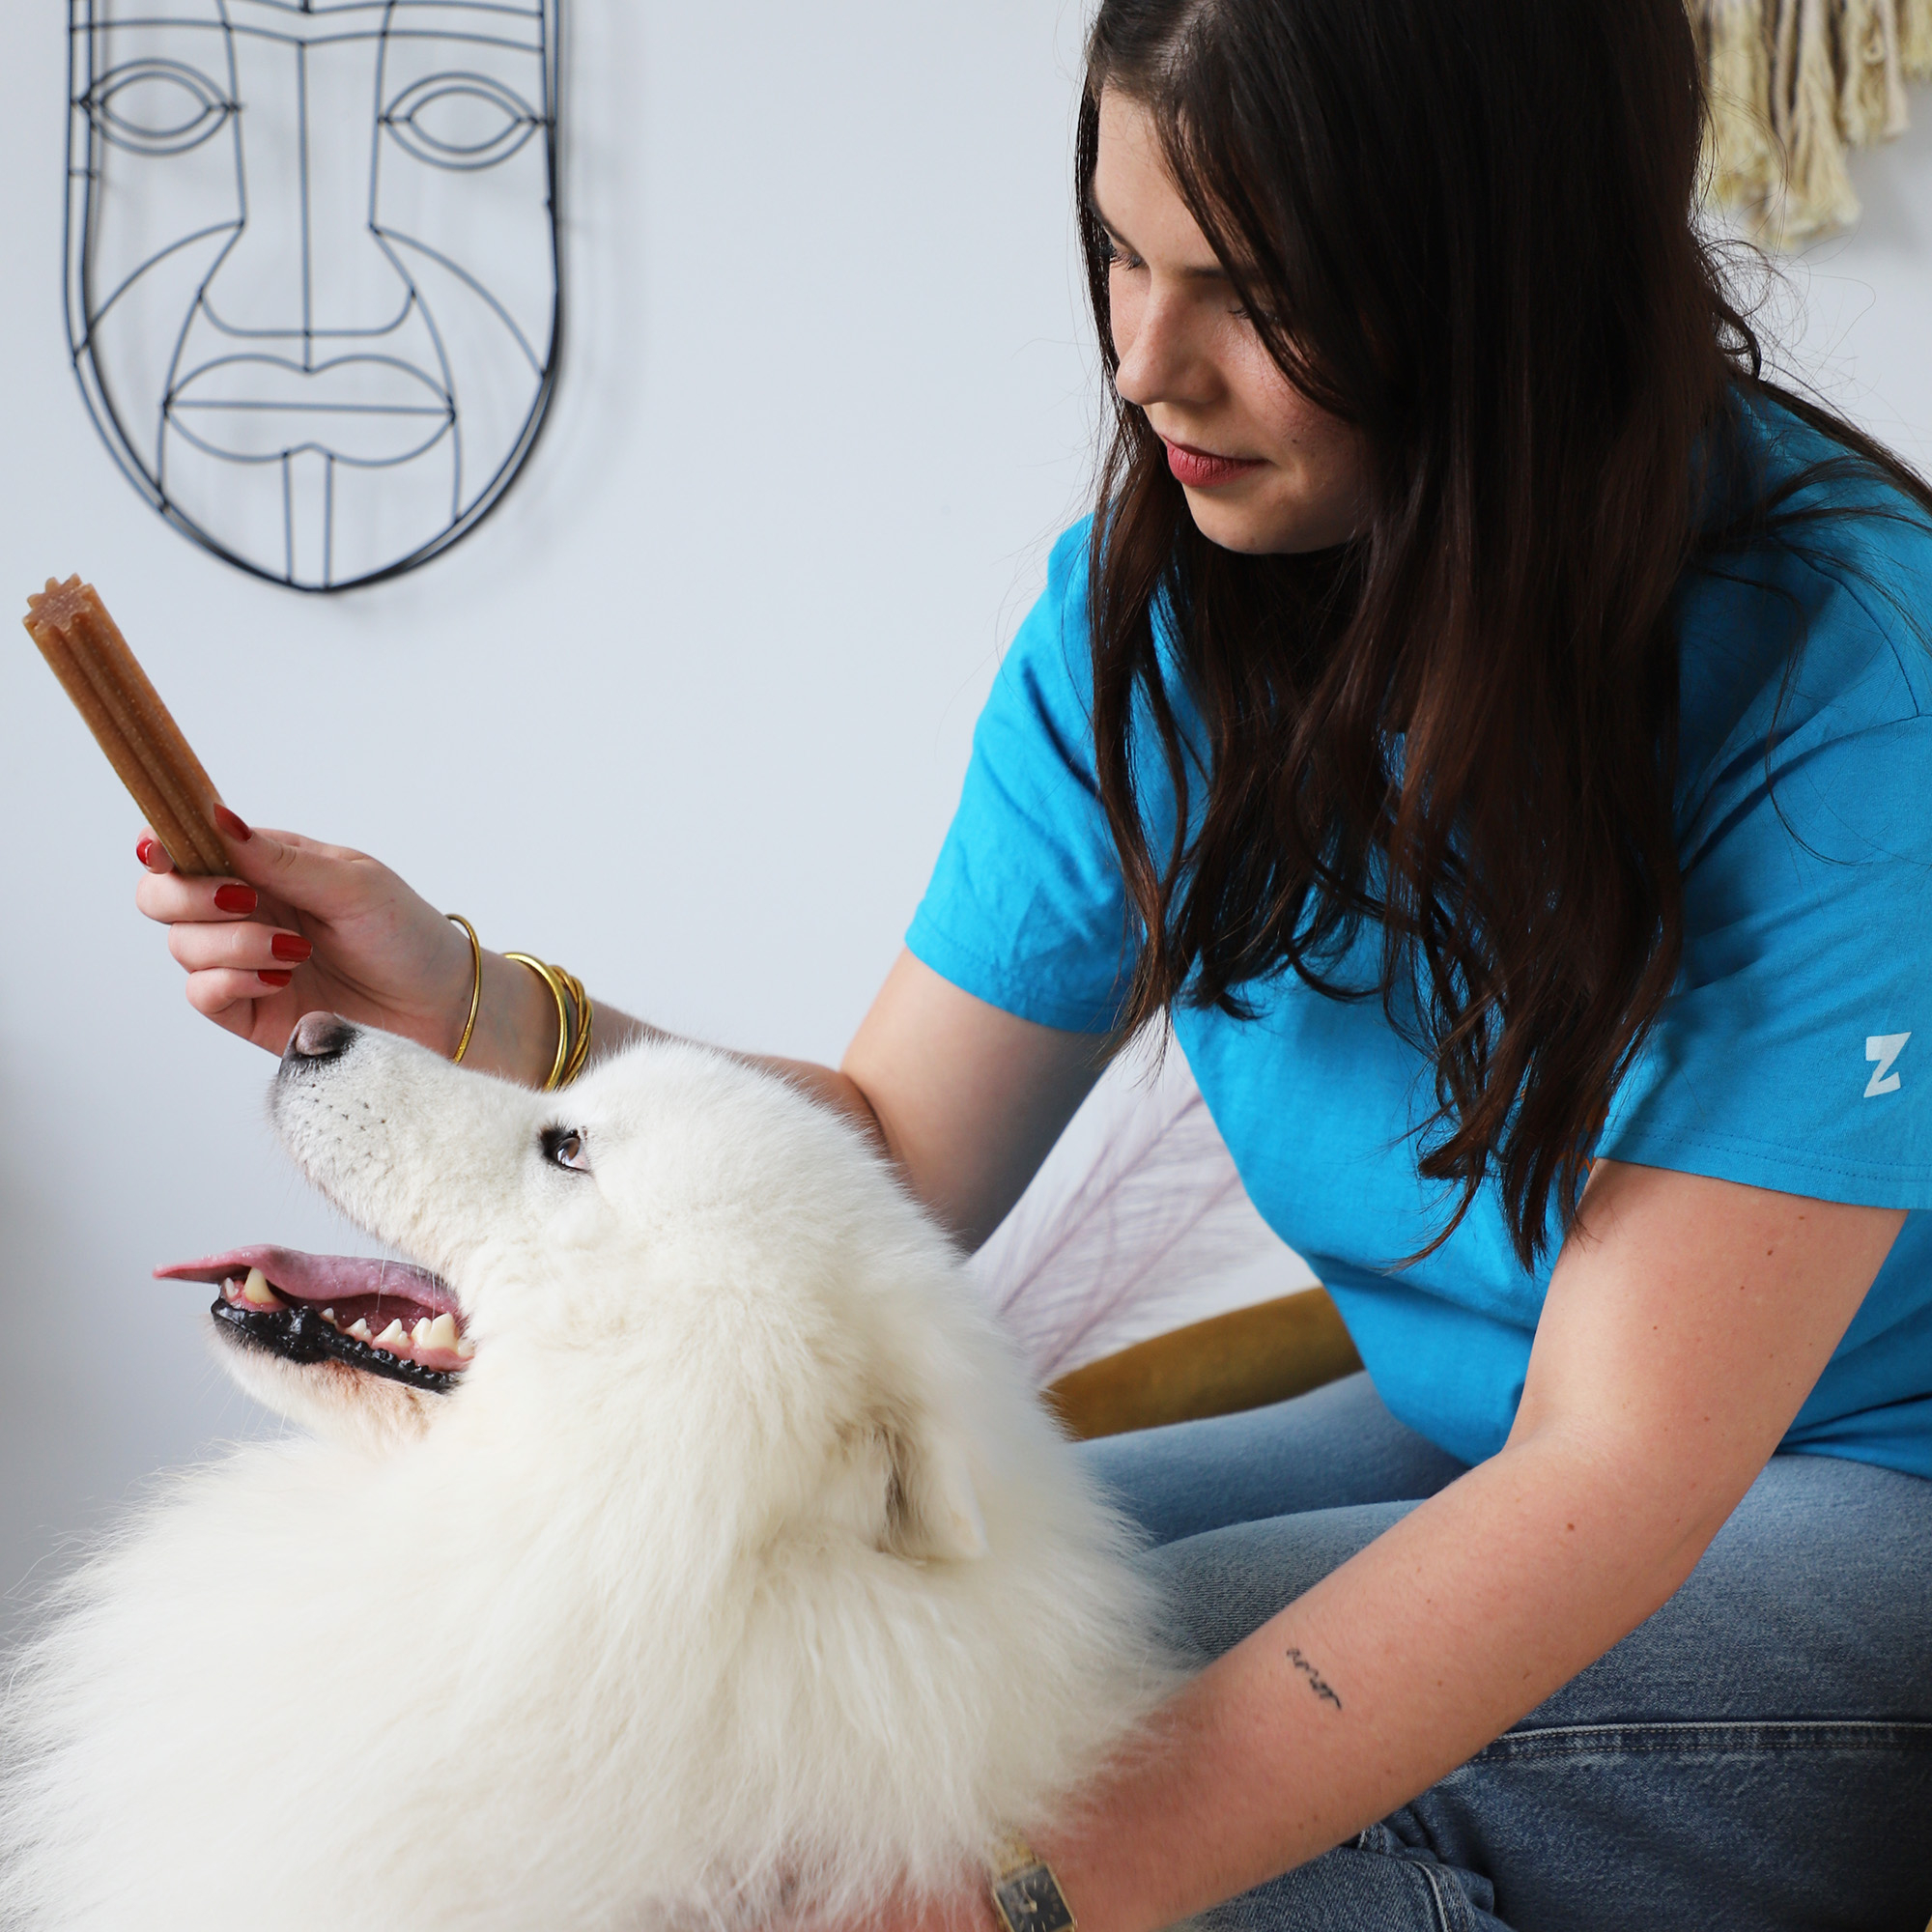 Daily's Maxi Zahnpflegesticks für große Hunde